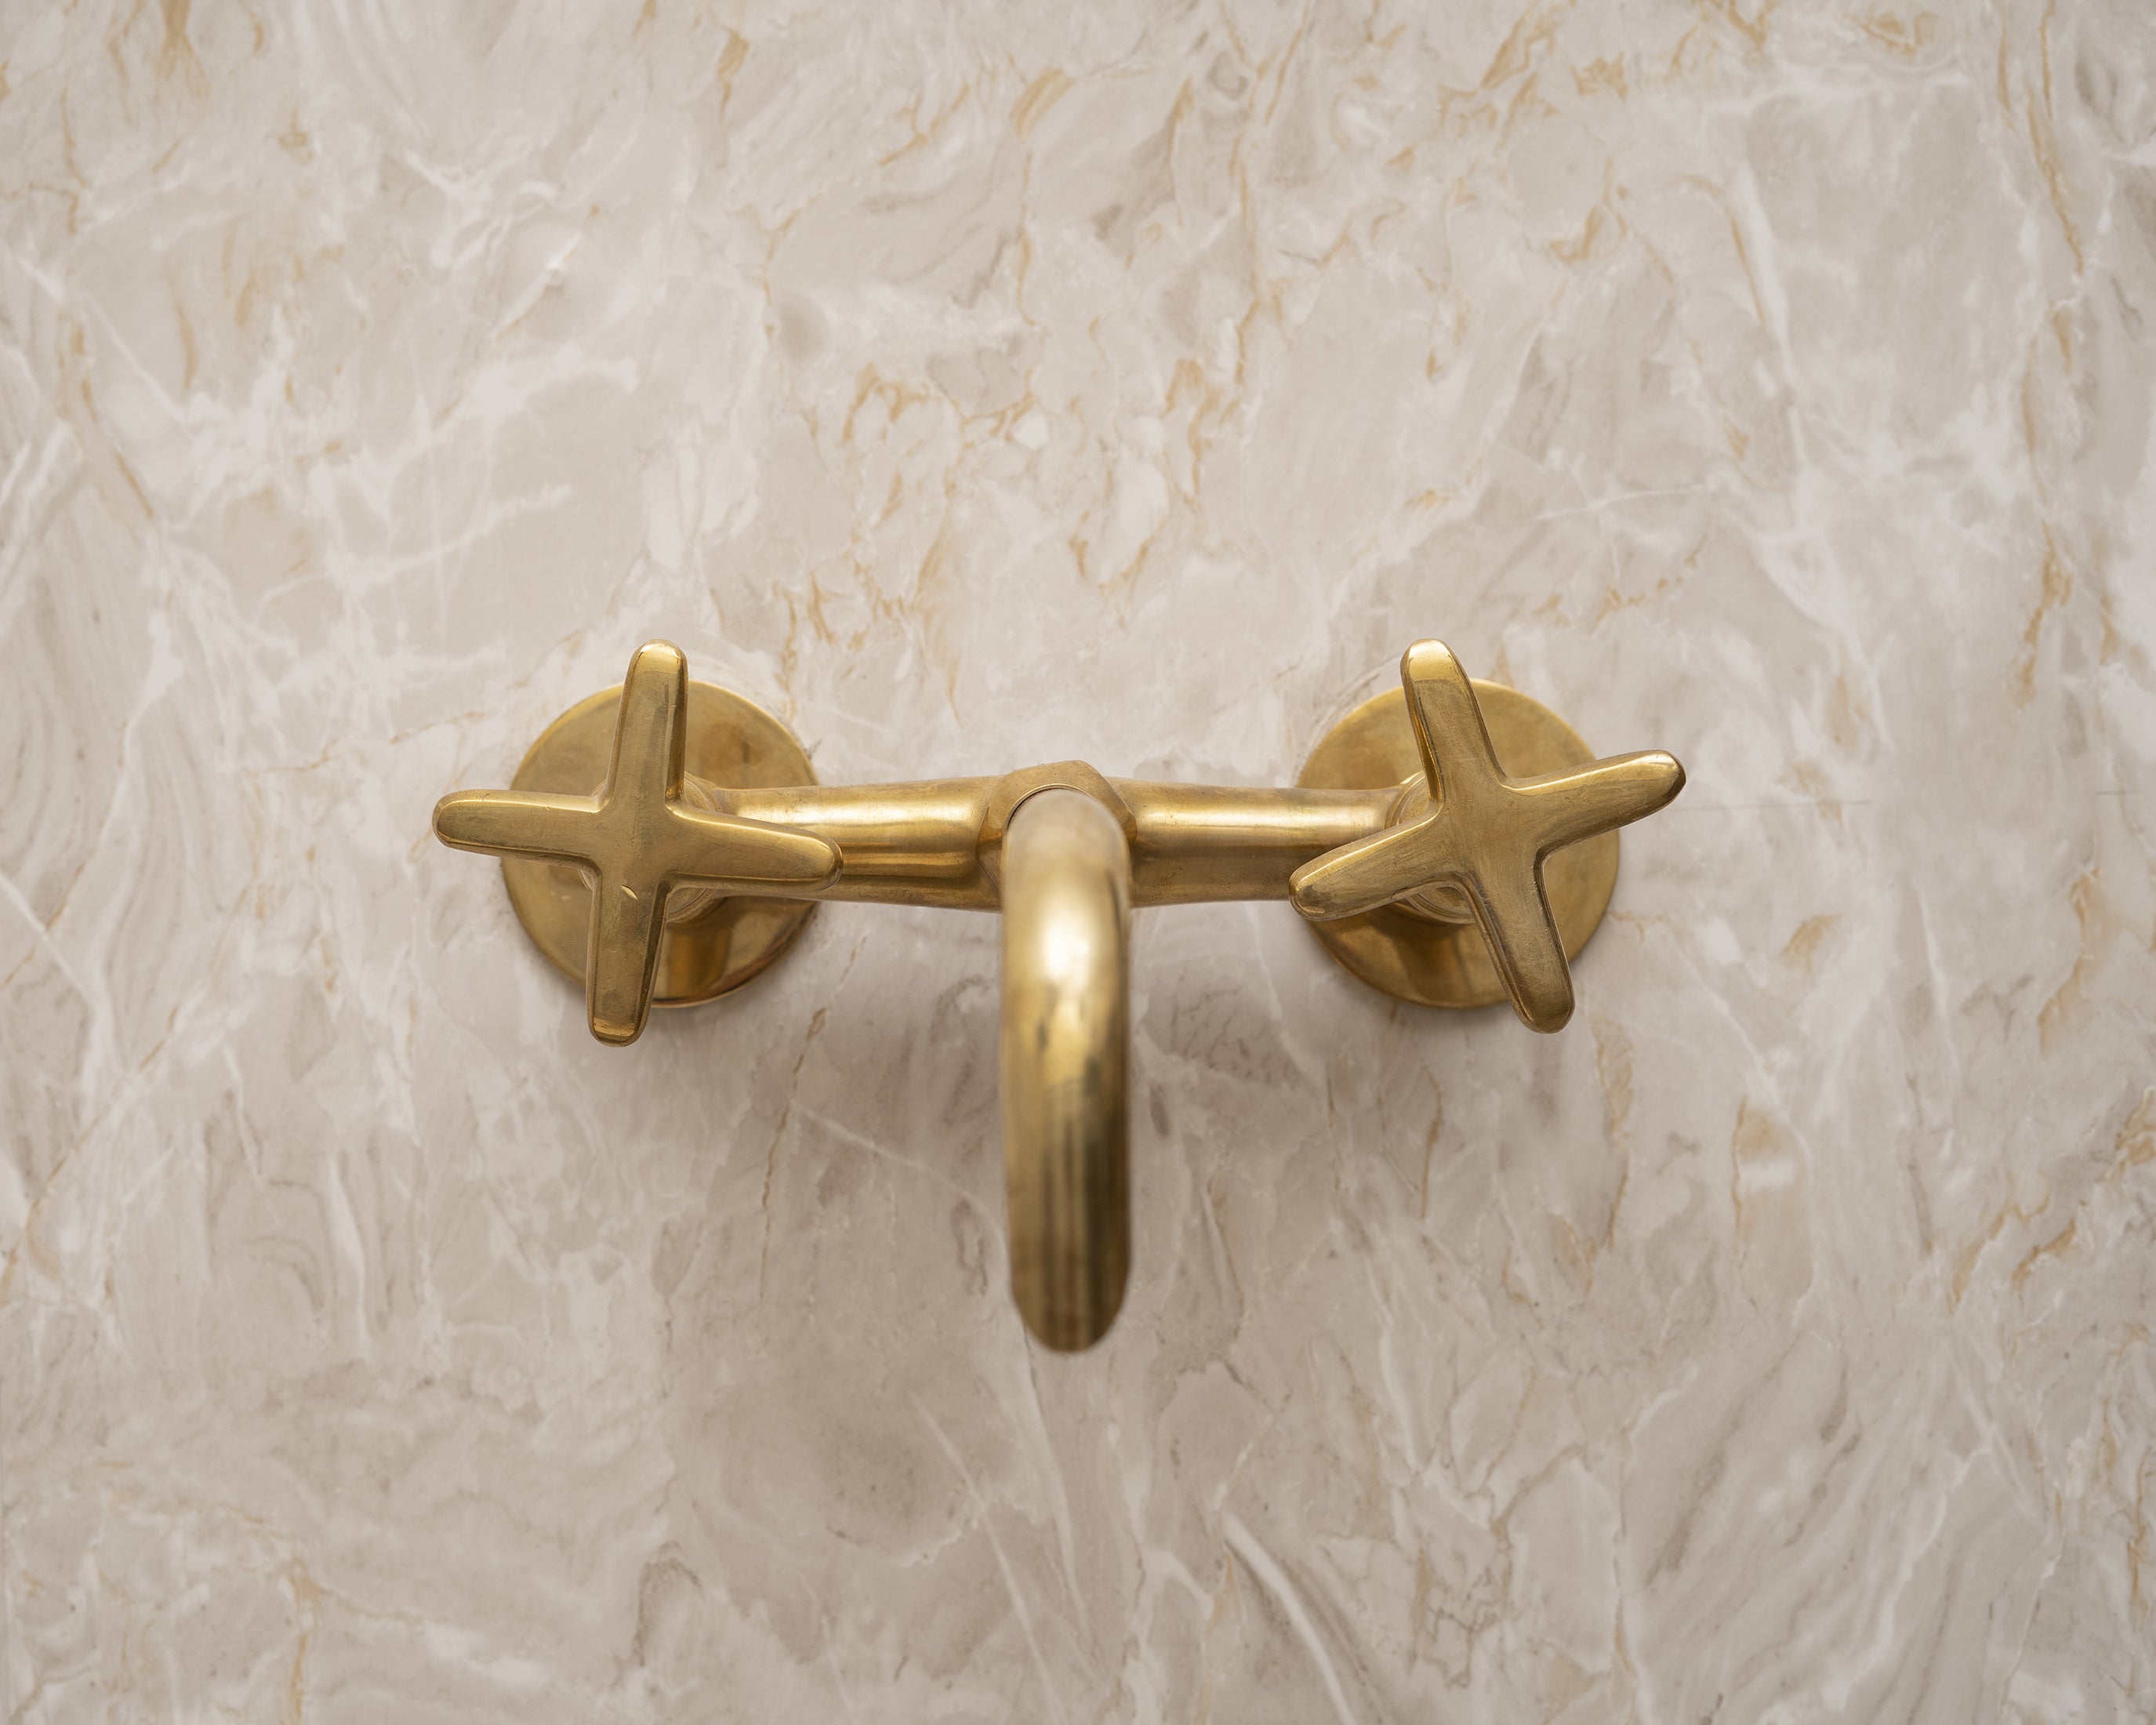 Unlacquered Brass Bathroom Tub Filler Faucet - Zayian